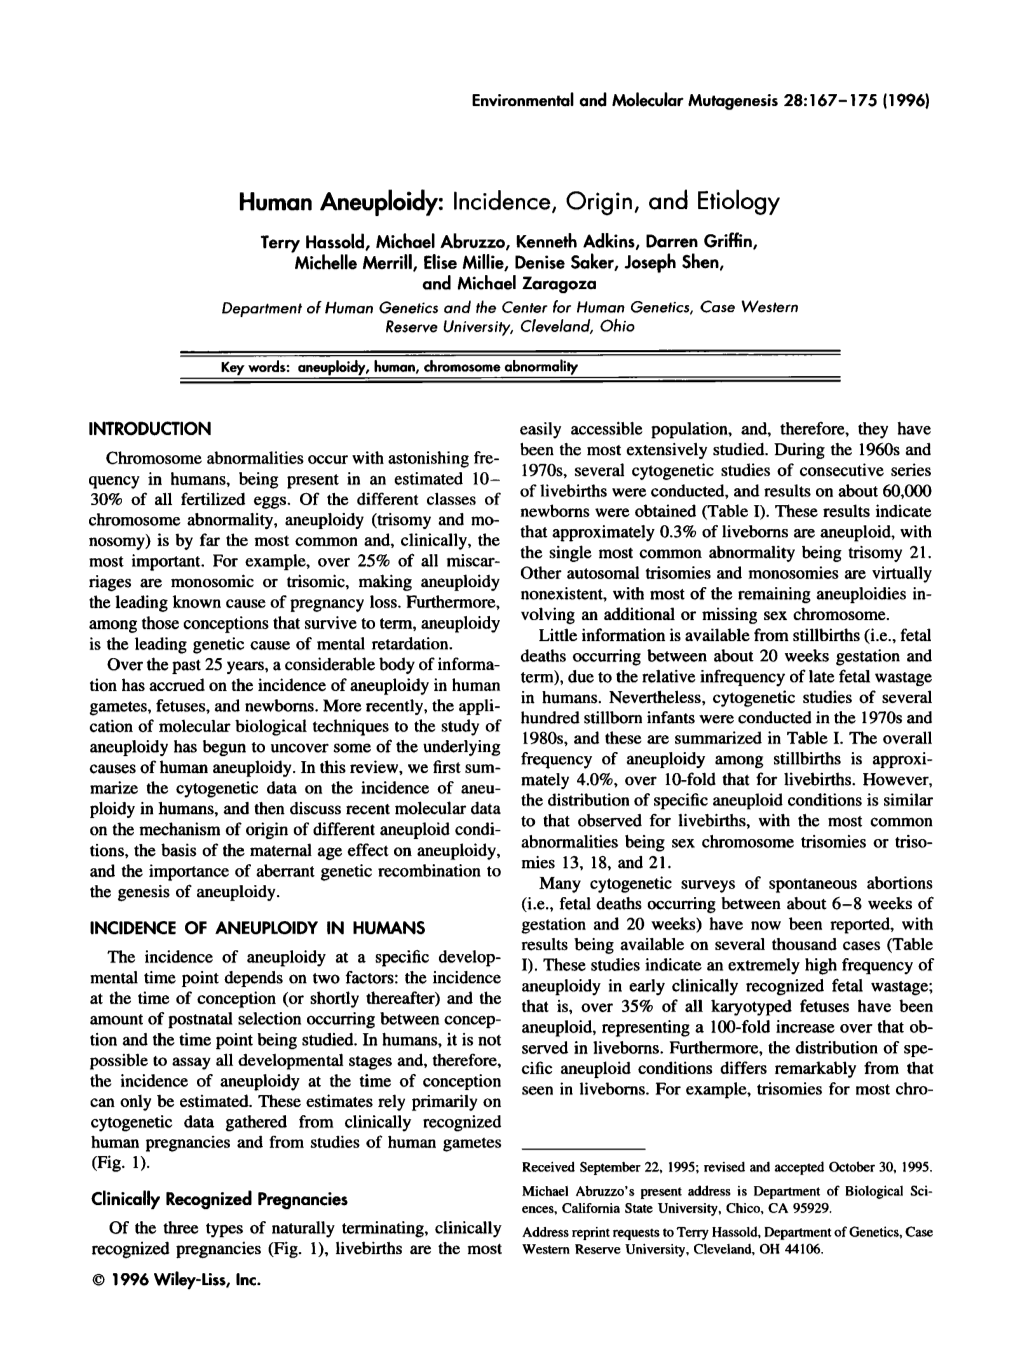 Human Aneuploidy: Incidence, Origin, and Etiology